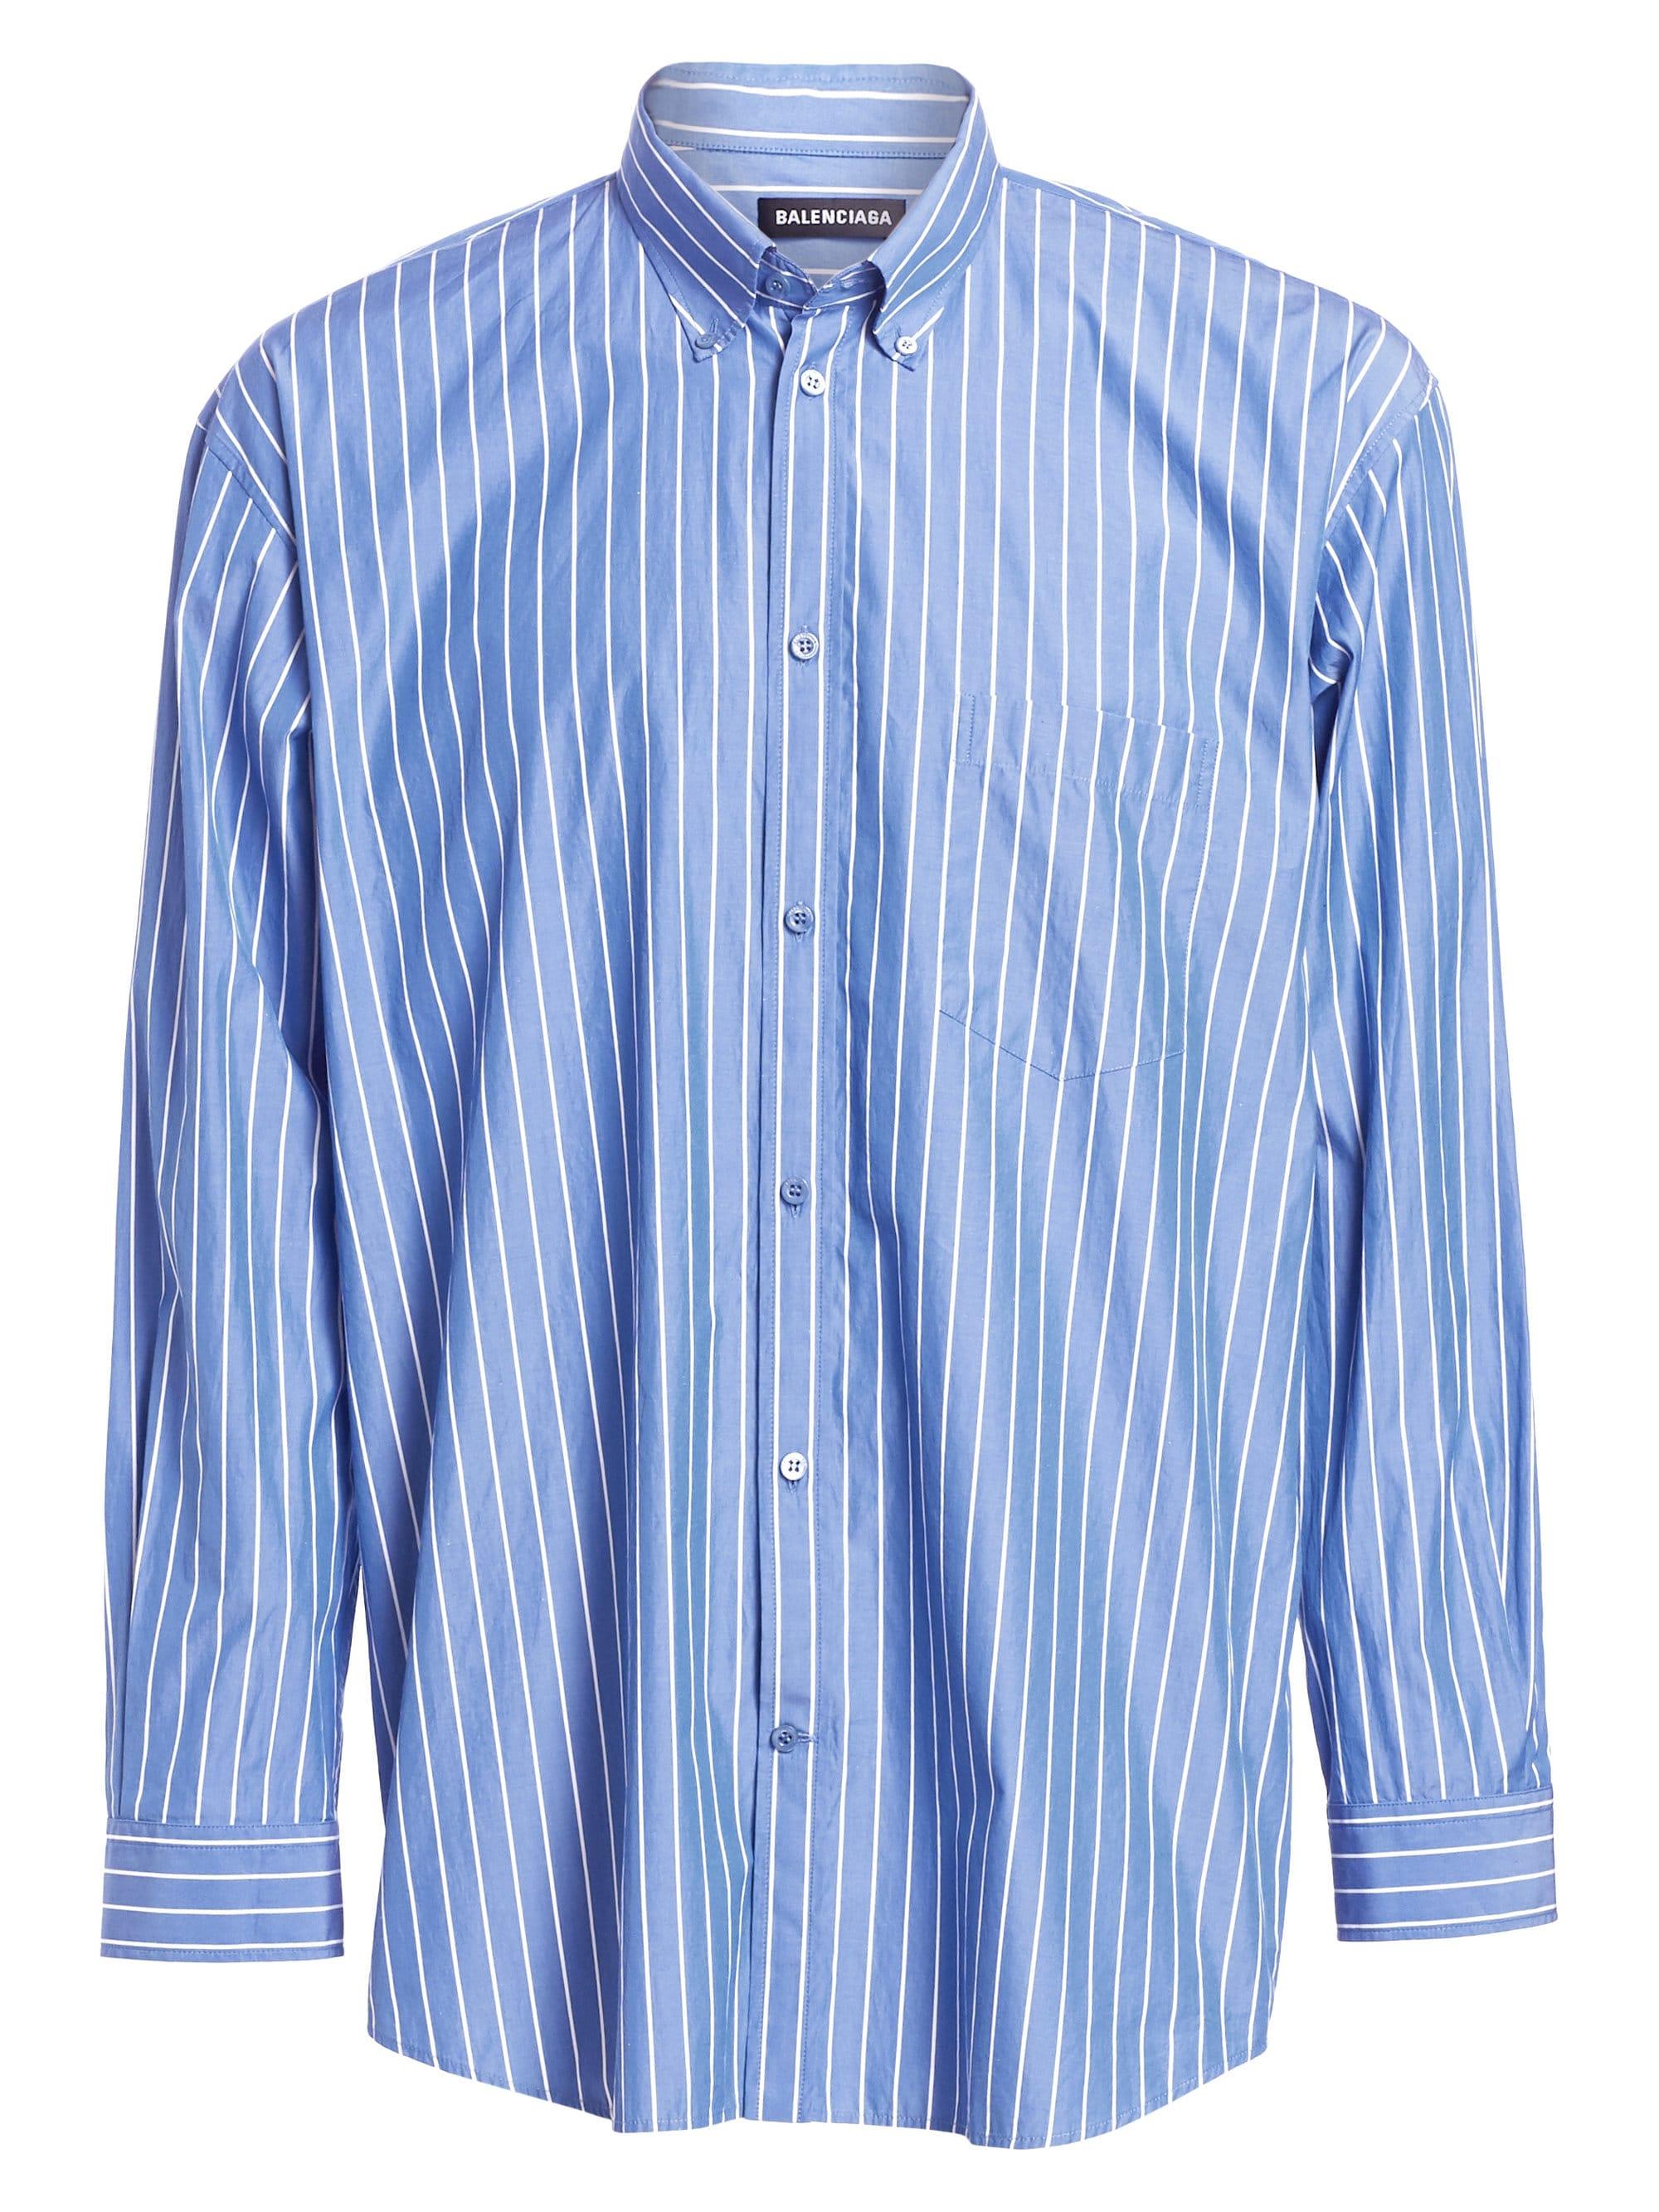 Lyst - Balenciaga Normal-fit Stripe Logo Button-down Shirt in Blue for Men